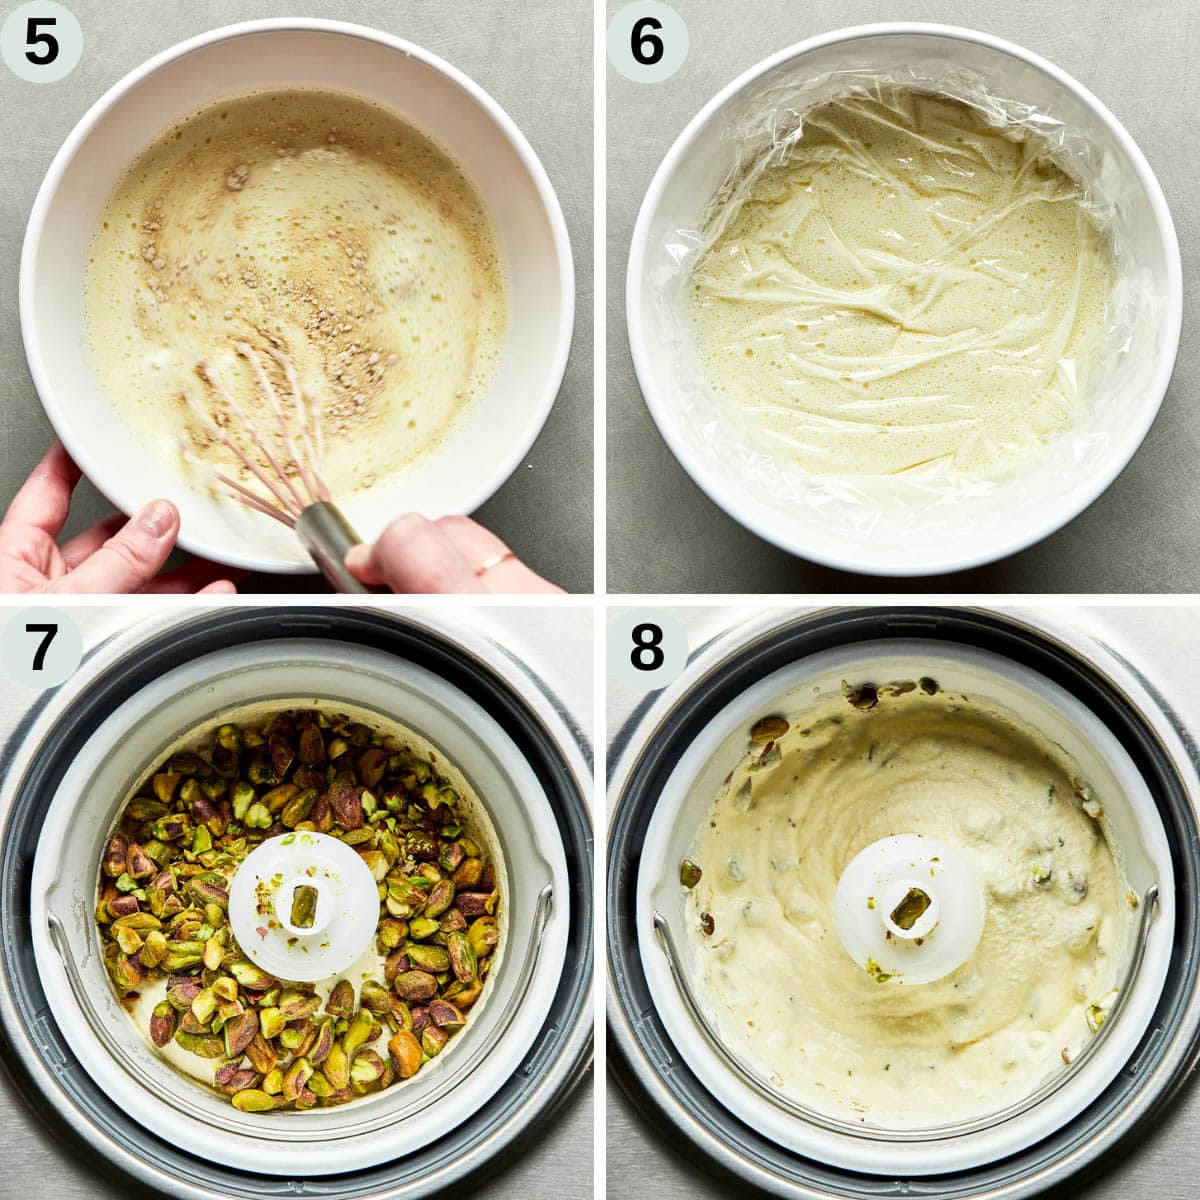 Process shots 5 to 8 to make pistachio ice cream.